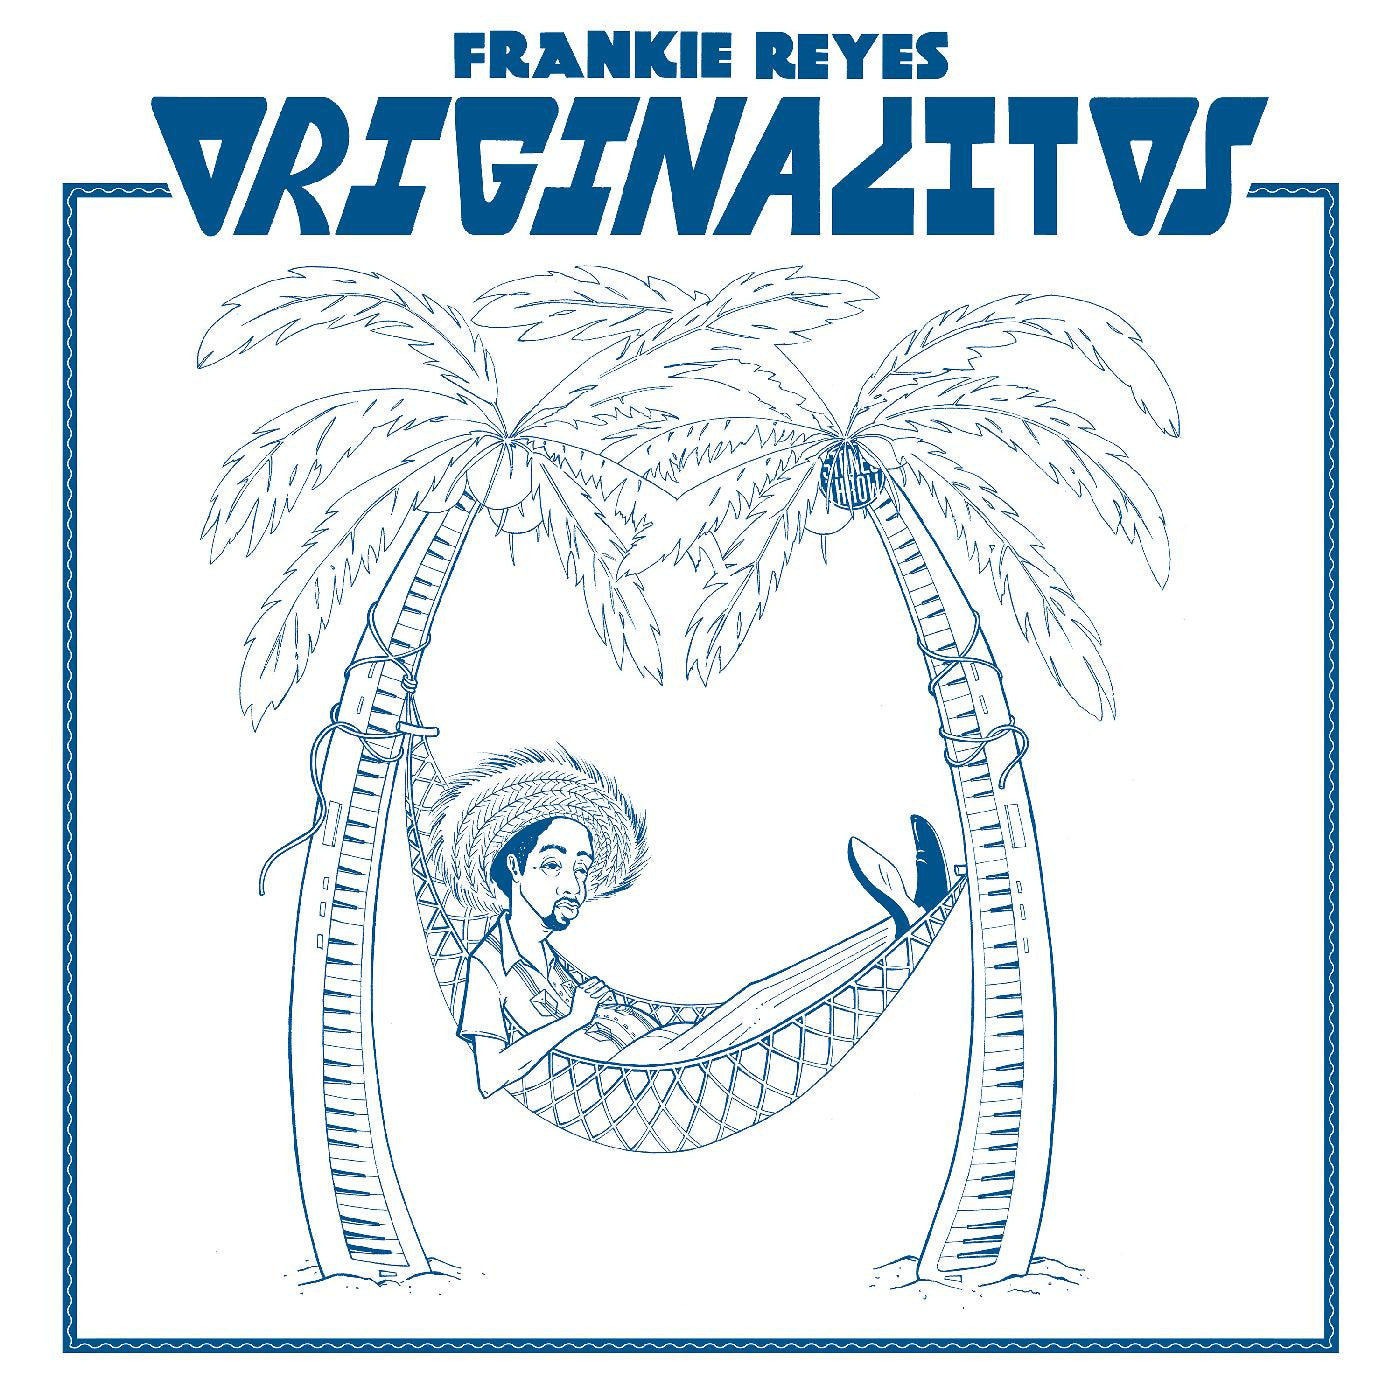 FRANKIE REYES - ORIGINALITOS Vinyl LP